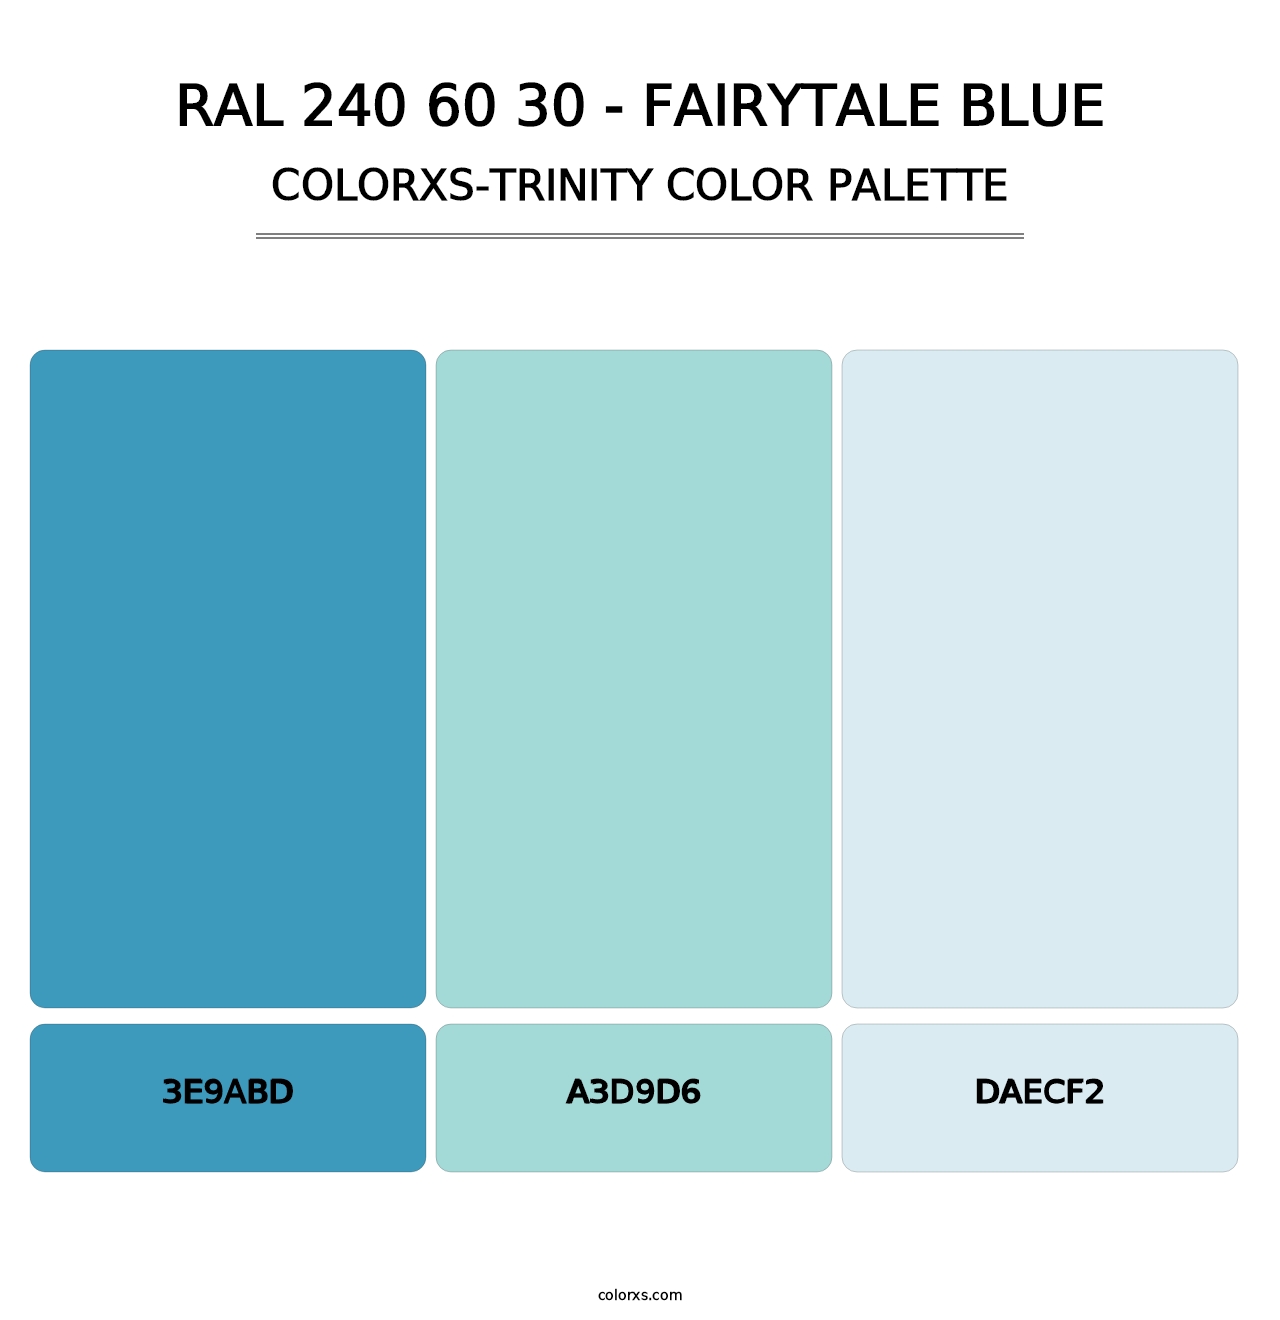 RAL 240 60 30 - Fairytale Blue - Colorxs Trinity Palette